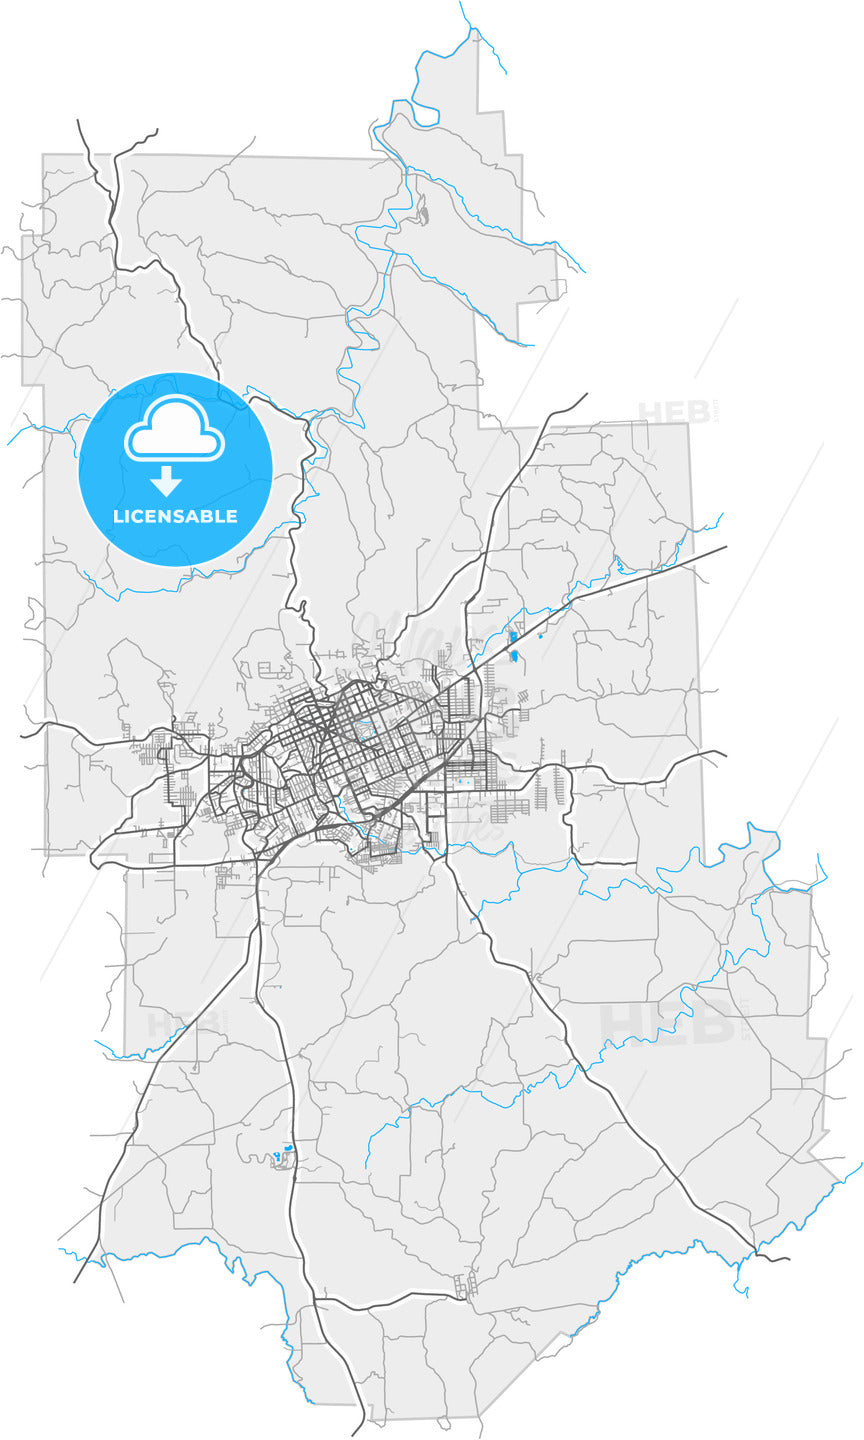 Erechim, Brazil, high quality vector map